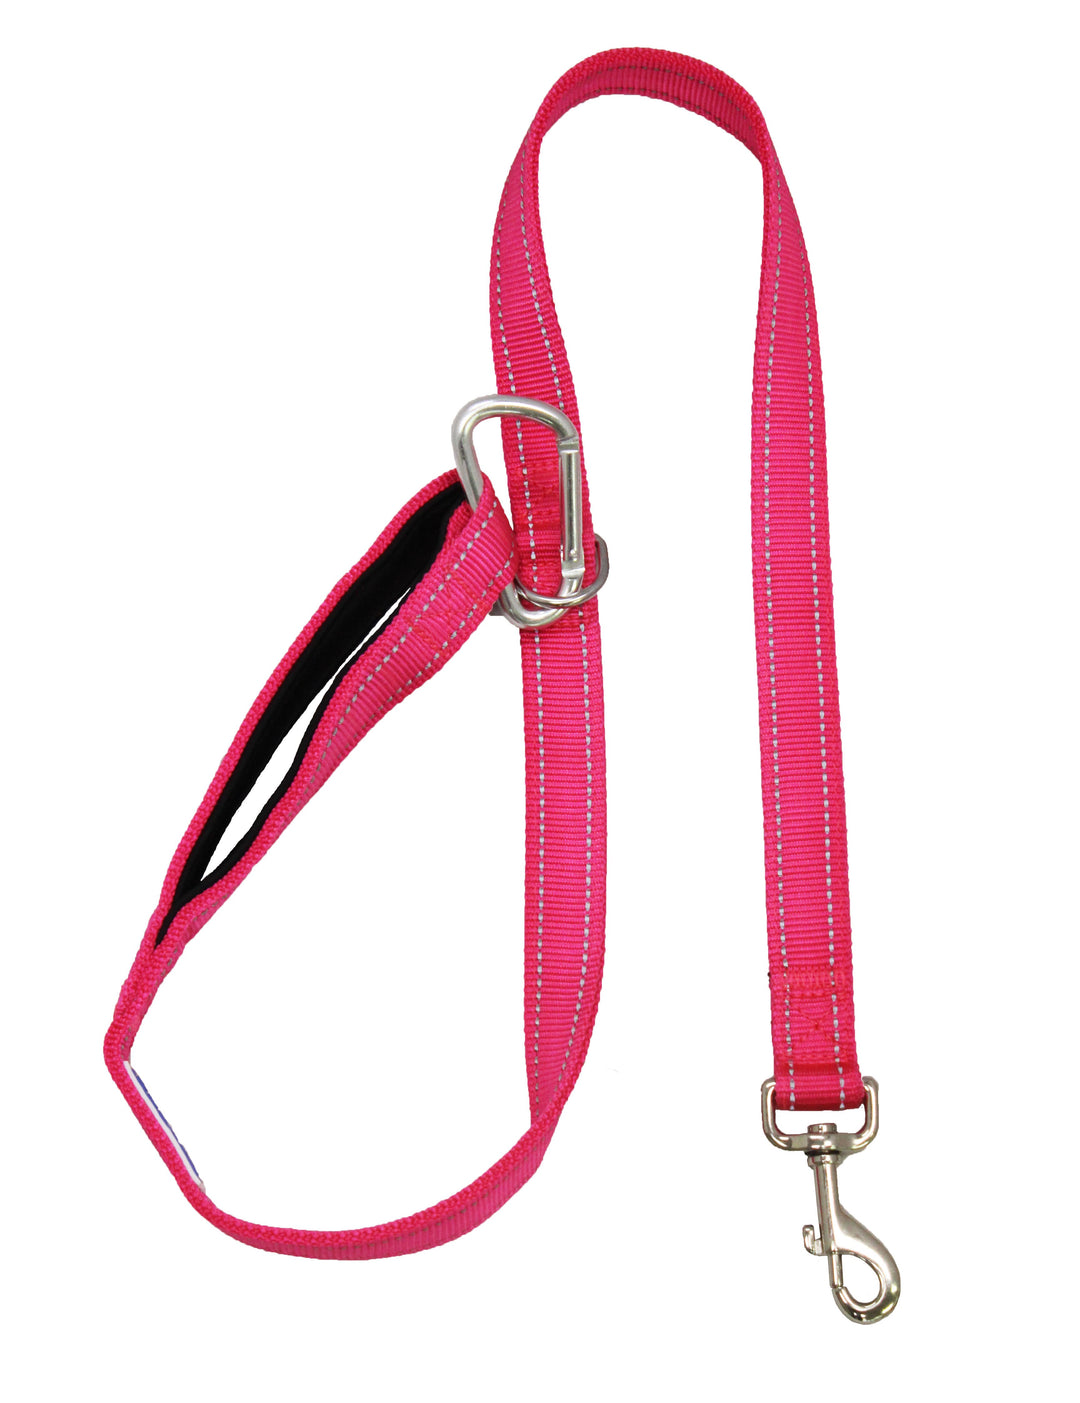 Hudson Bay Dog Leash | Sunset Pink